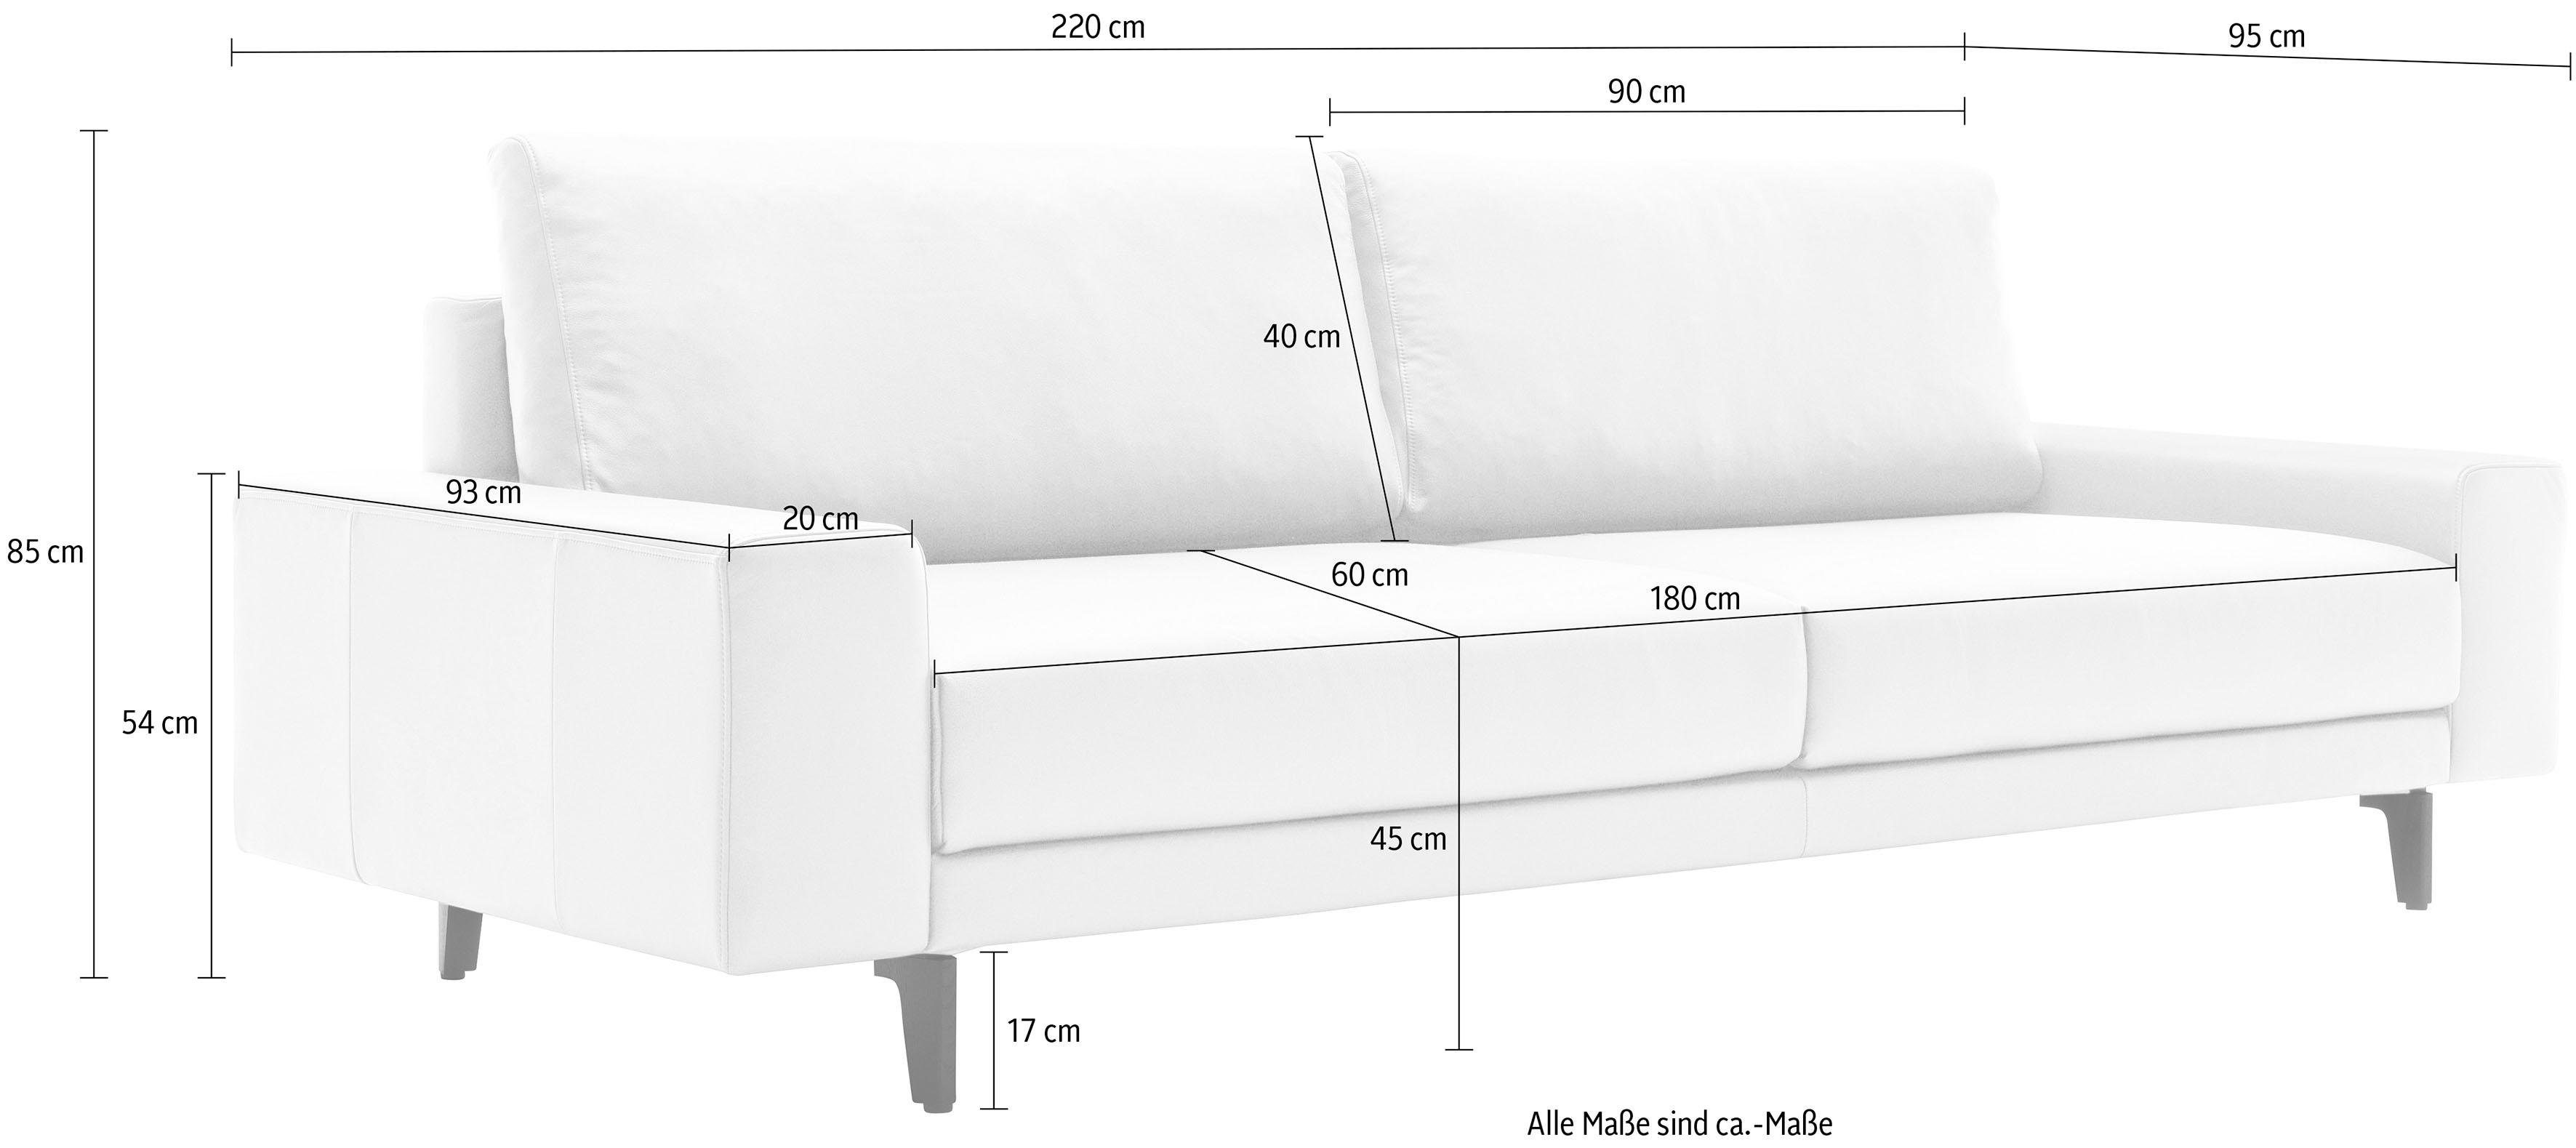 umbragrau, sofa breit Armlehne Breite cm in niedrig, hs.450, Alugussfüße hülsta 3-Sitzer 220